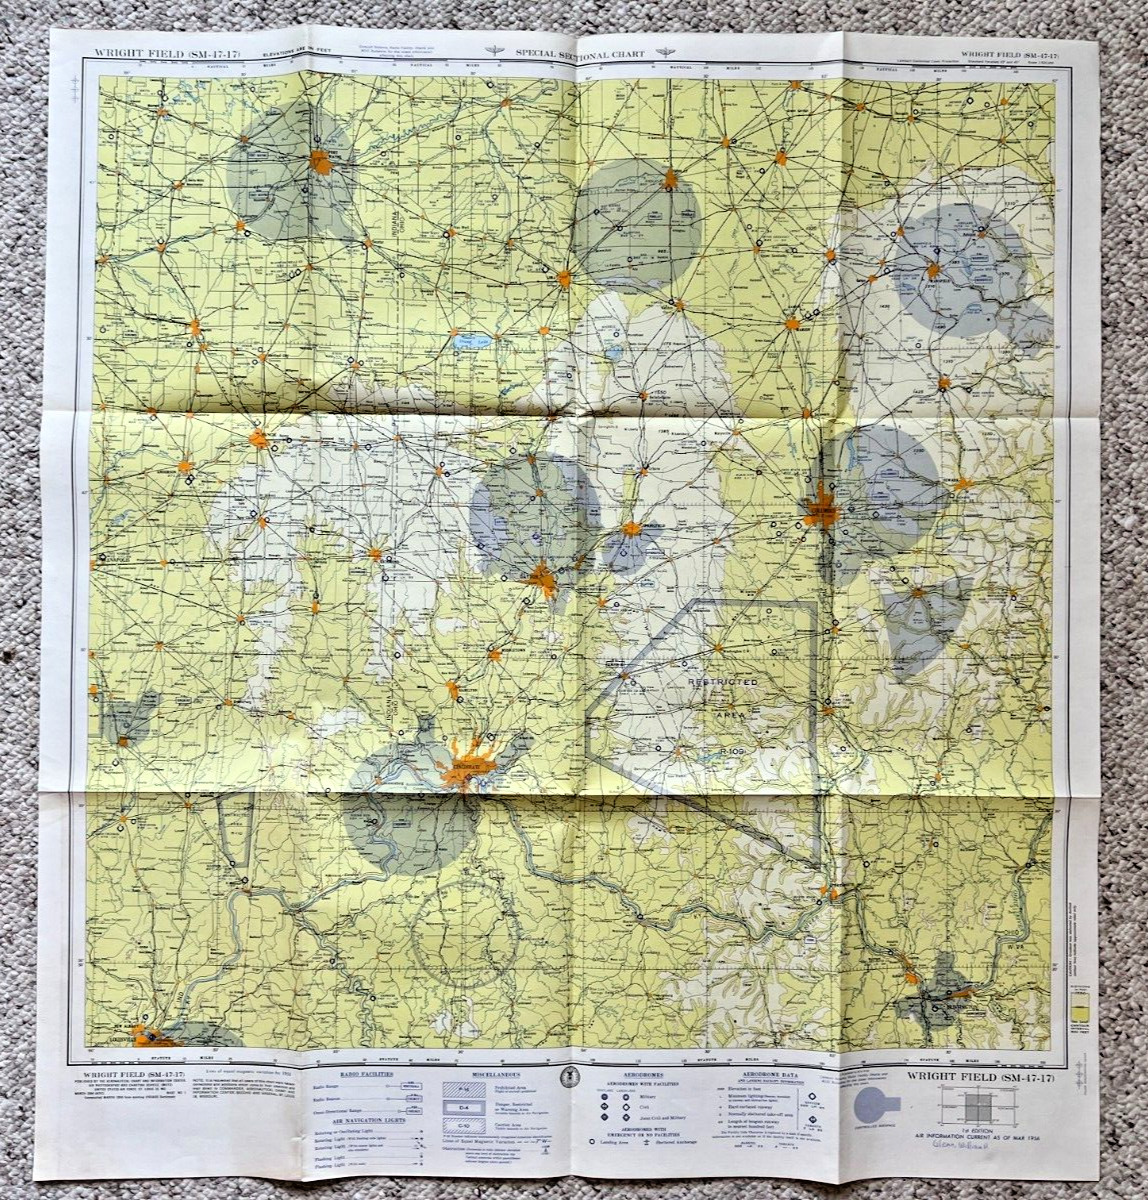 1956 Map Of Wright Field Dayton Ohio  US Air Force  Aeronautical Chart 29” X 31”